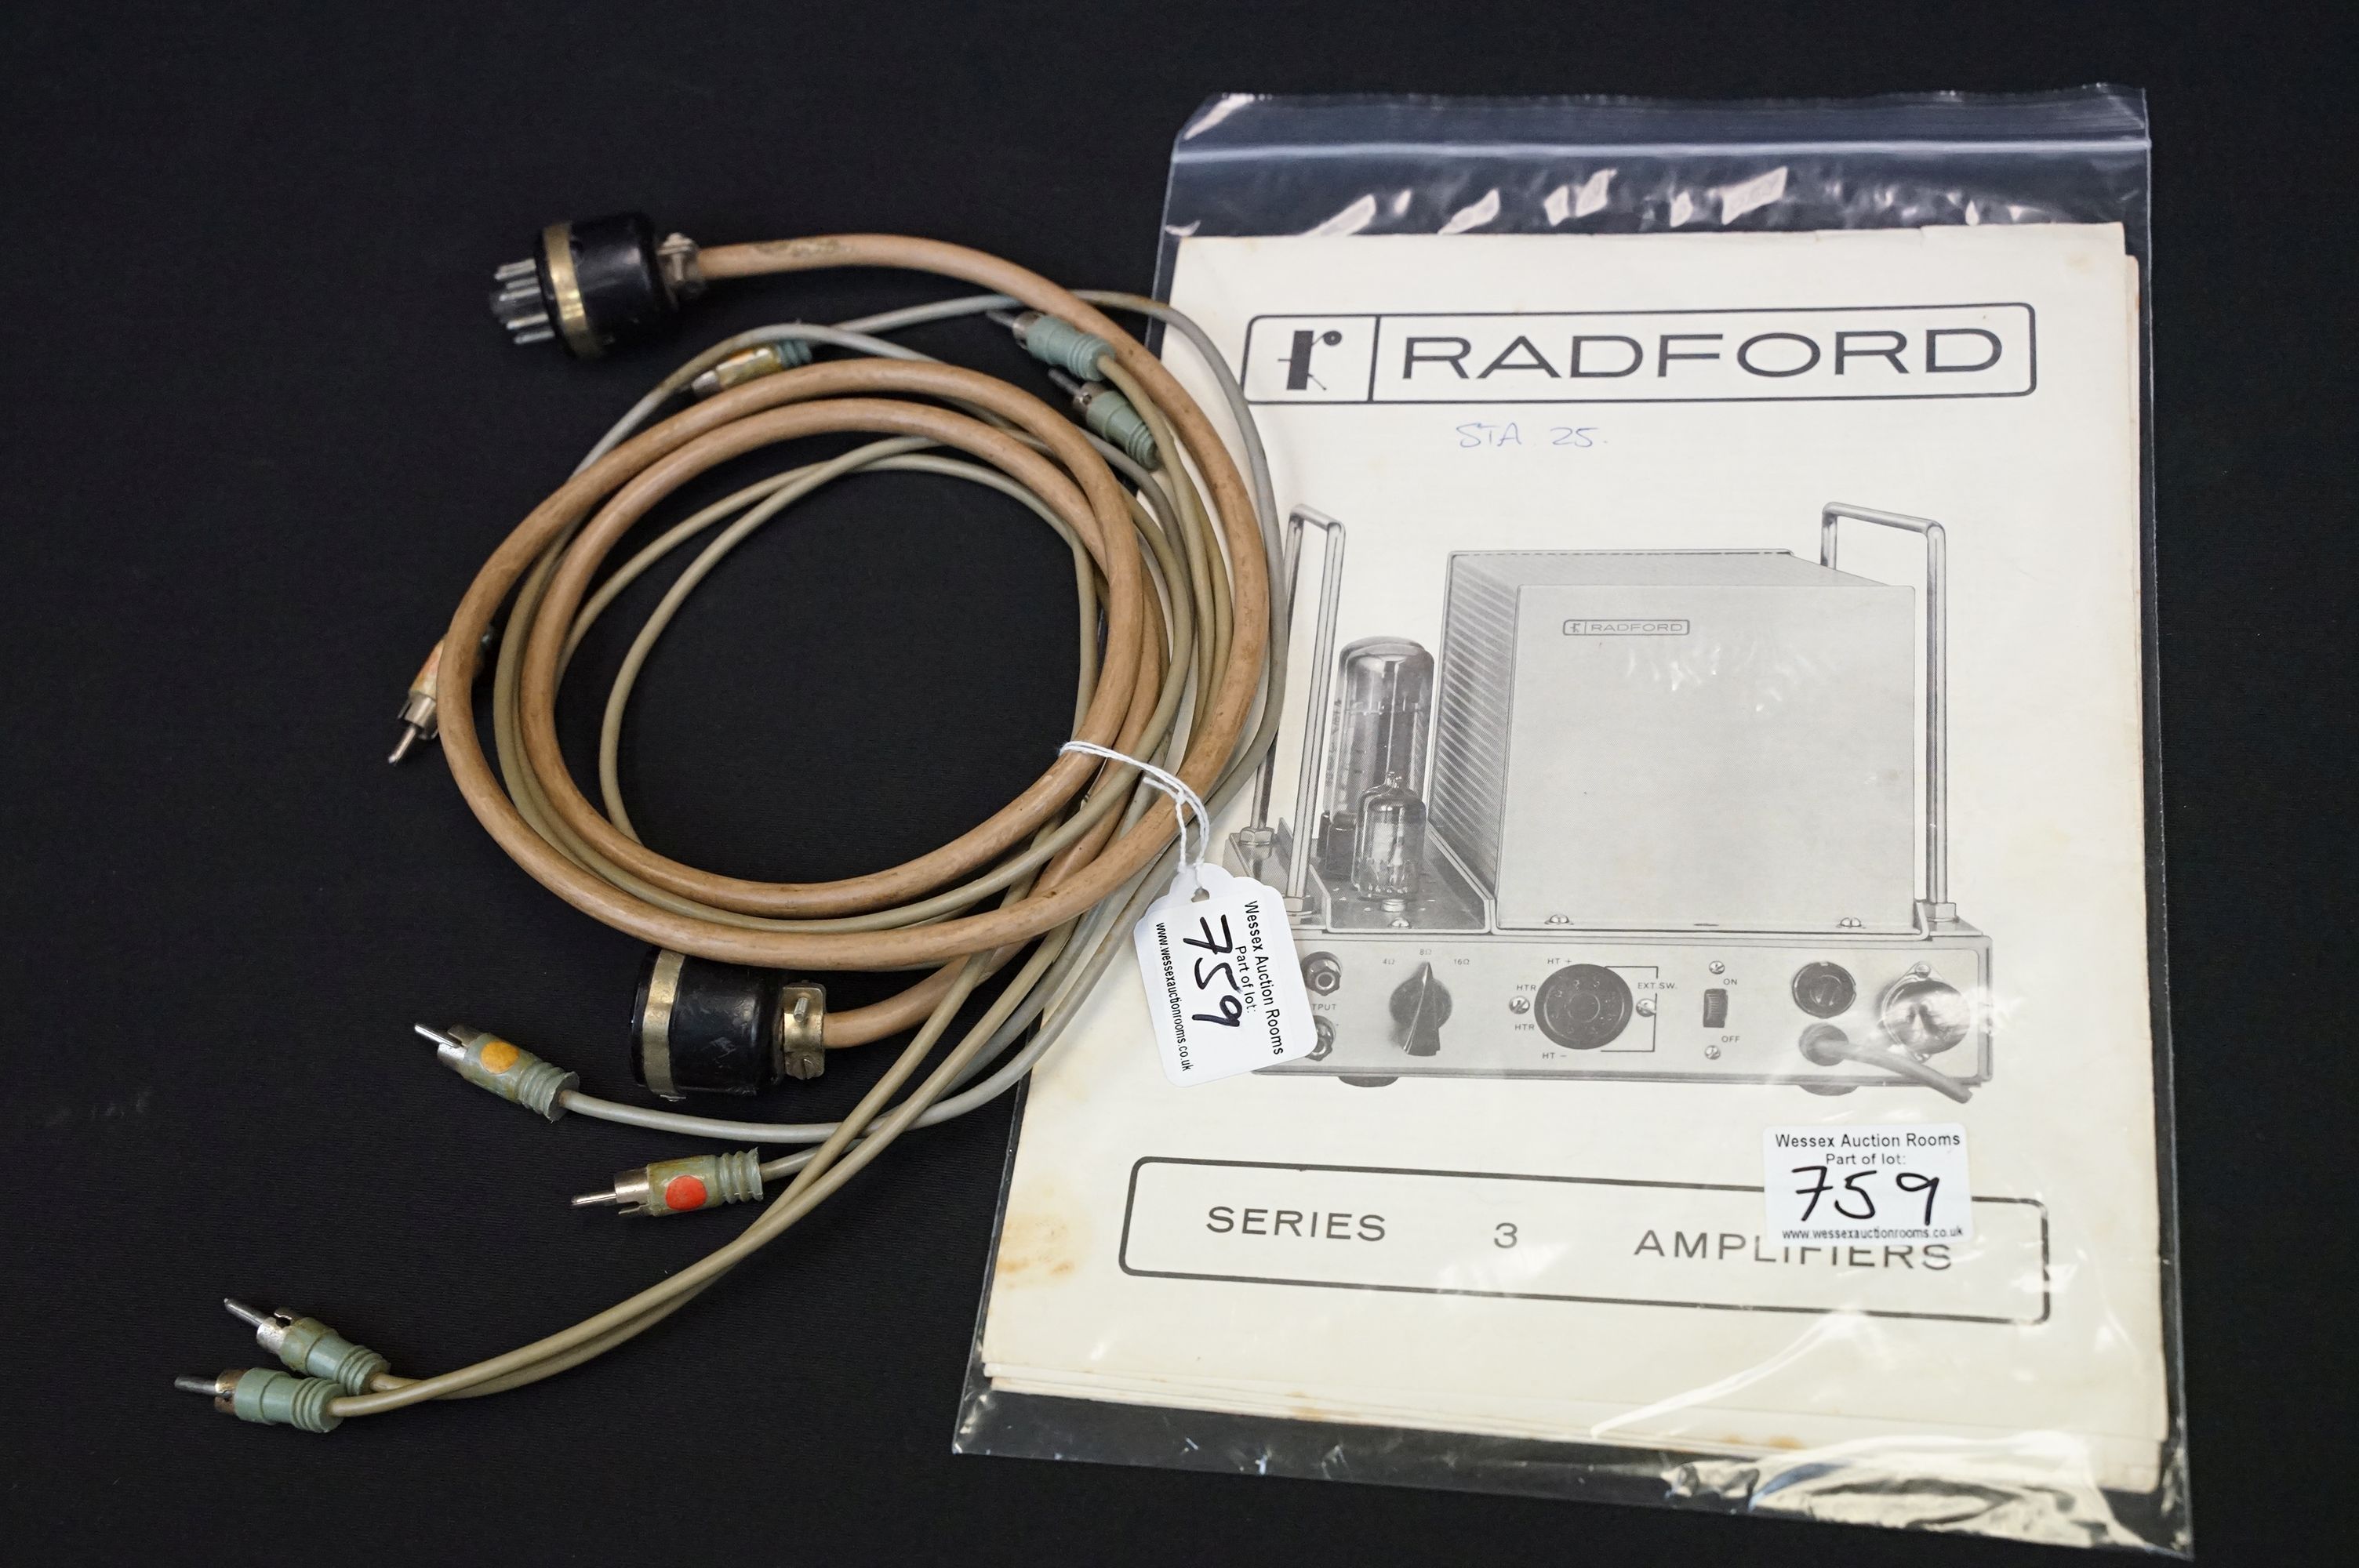 Stereo equipment - Radford STA 25 Series 3 Power Amplifier, Radford SC22 Control Unit, Radford FMT.1 - Image 18 of 18